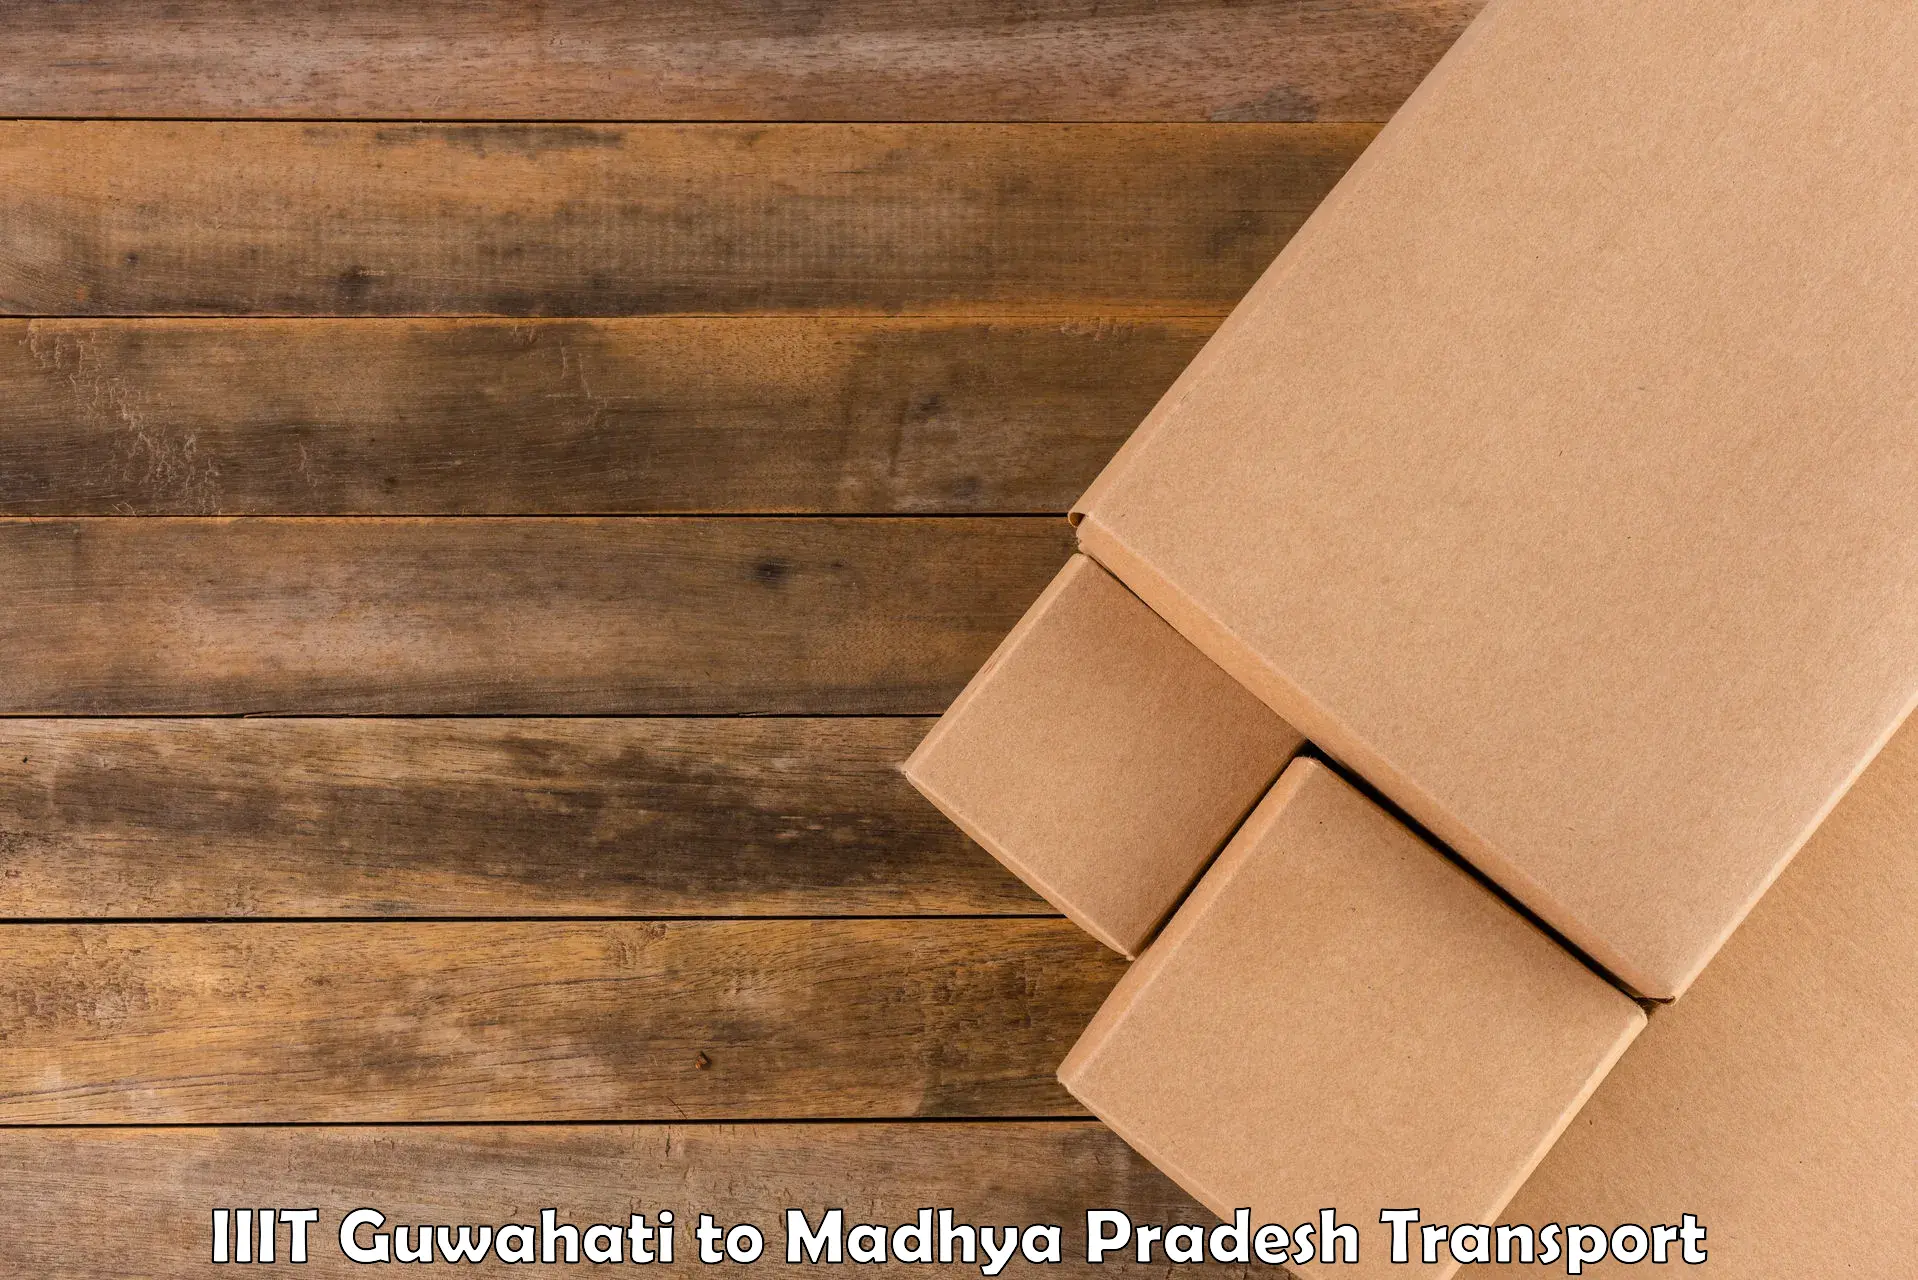 Cycle transportation service IIIT Guwahati to Madhya Pradesh